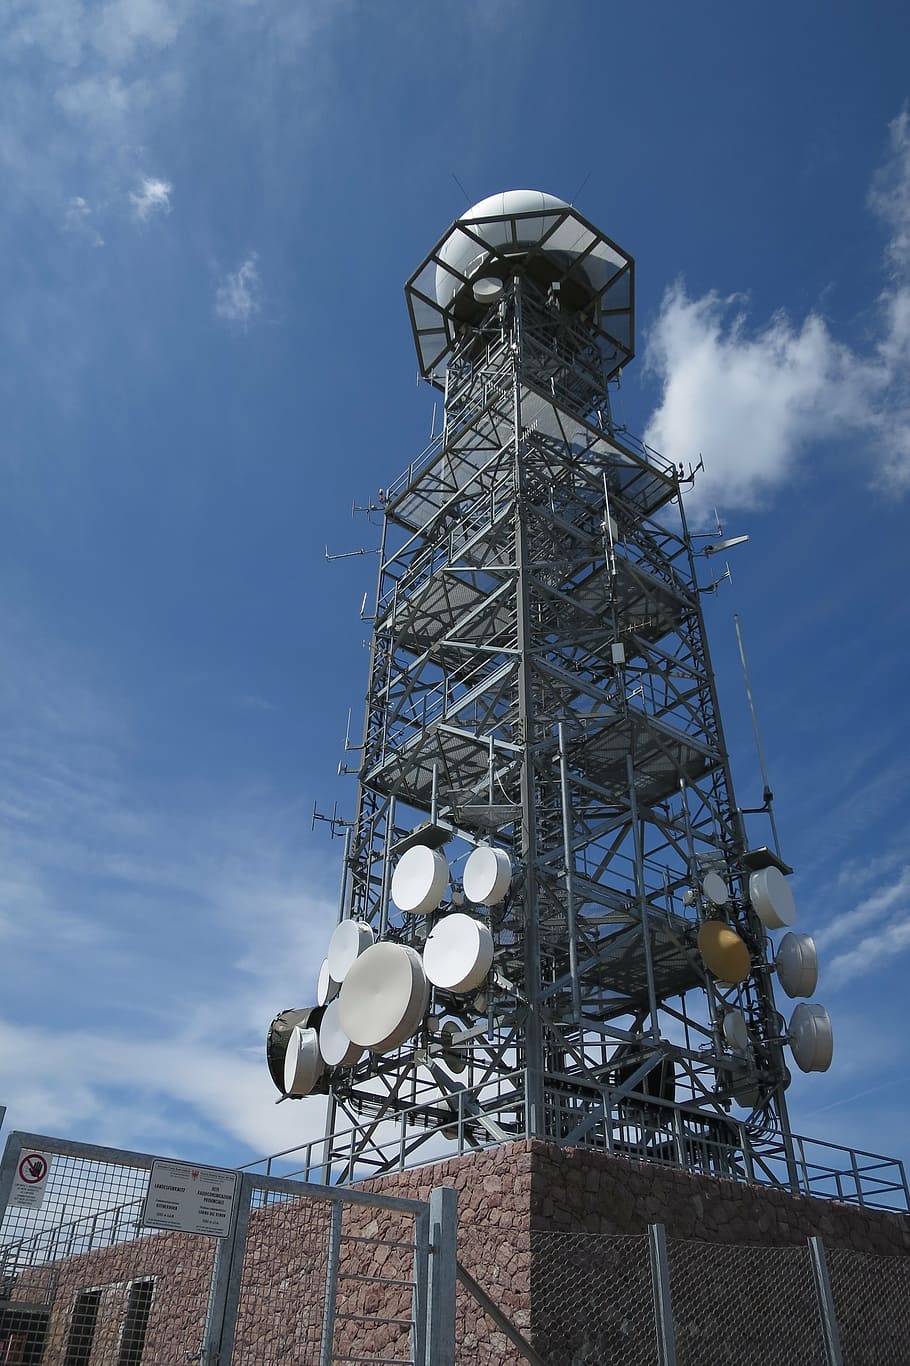 comunicación, transmisión, difusión, antena, estructura construida, cielo, vista de ángulo bajo, arquitectura, nube - cielo, torre